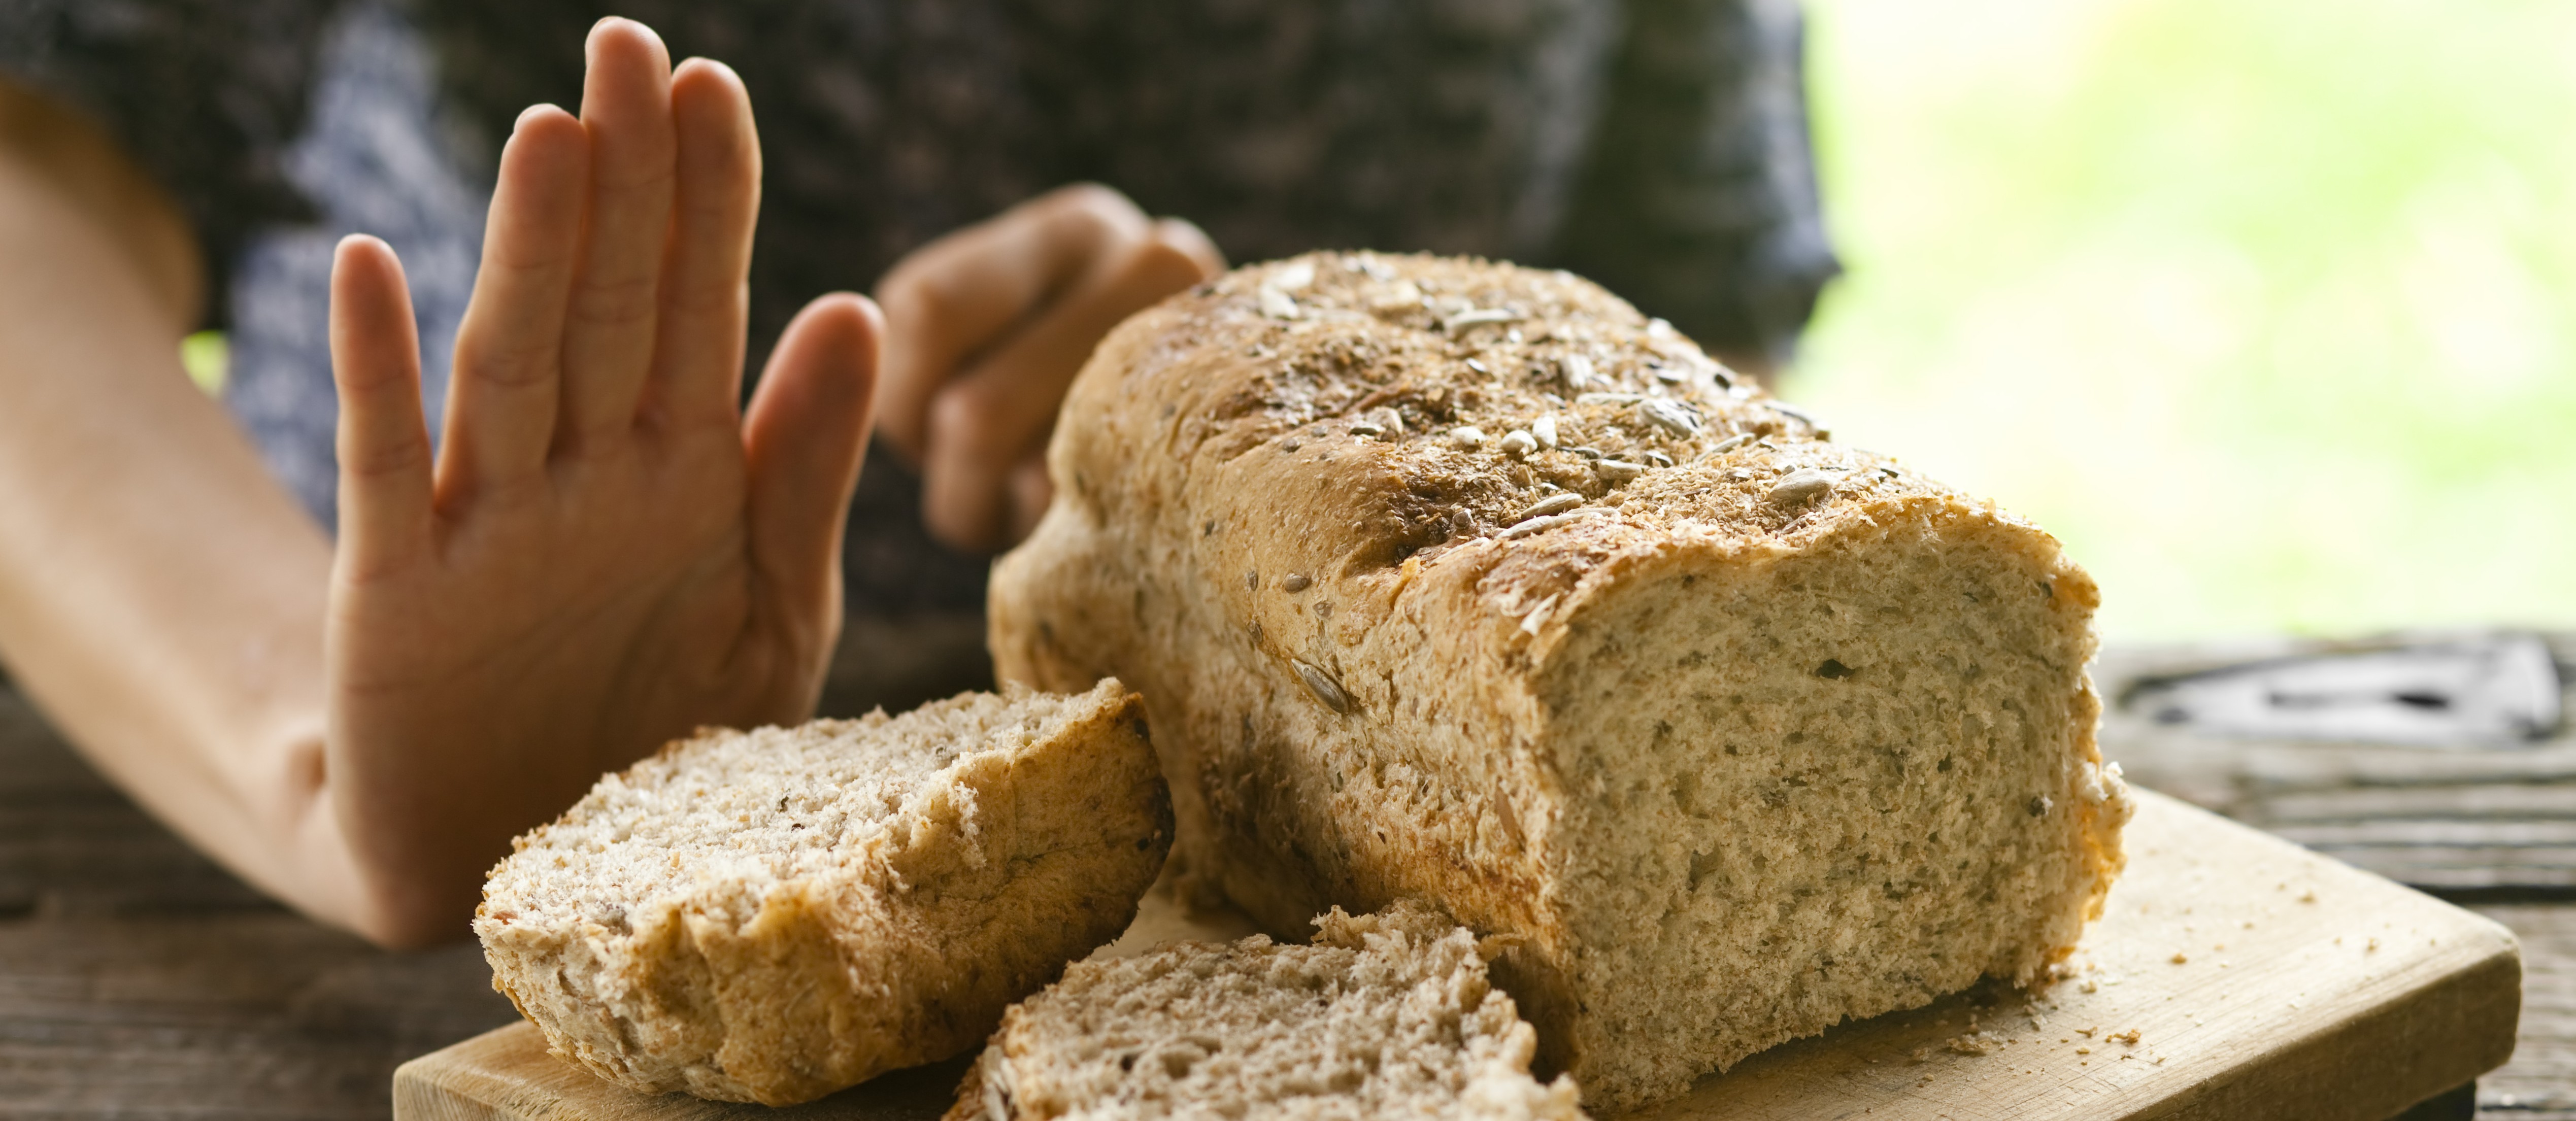 no-bread-thanks-gluten-free-concept